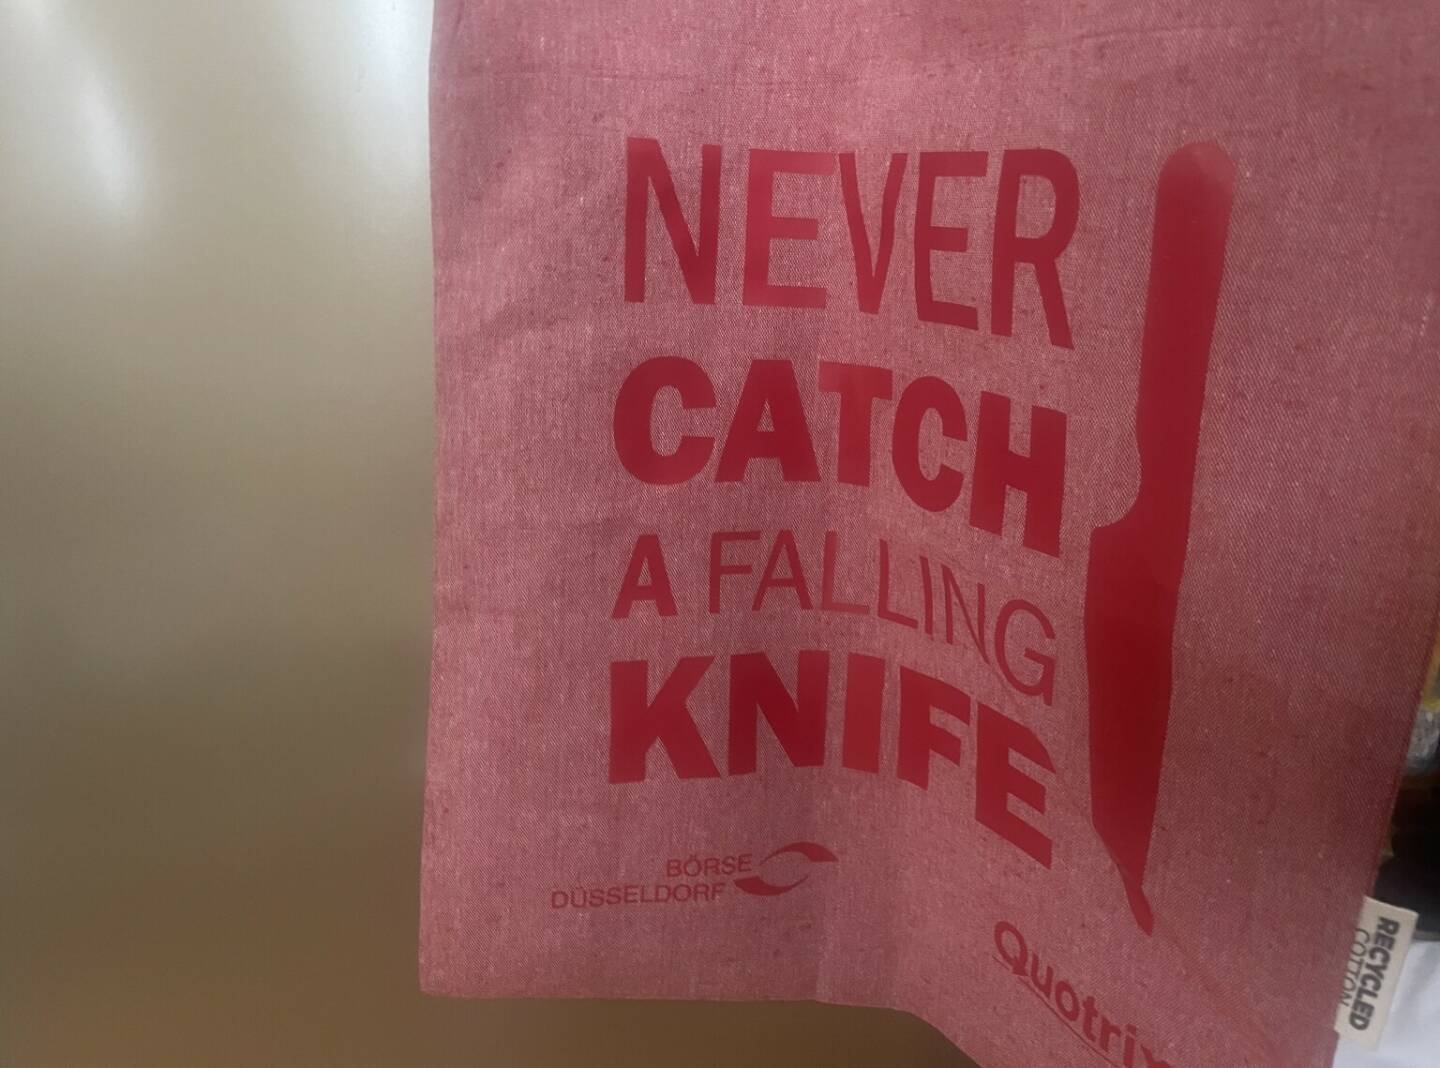 Never Catch al Falling Knife by Quotrix.de